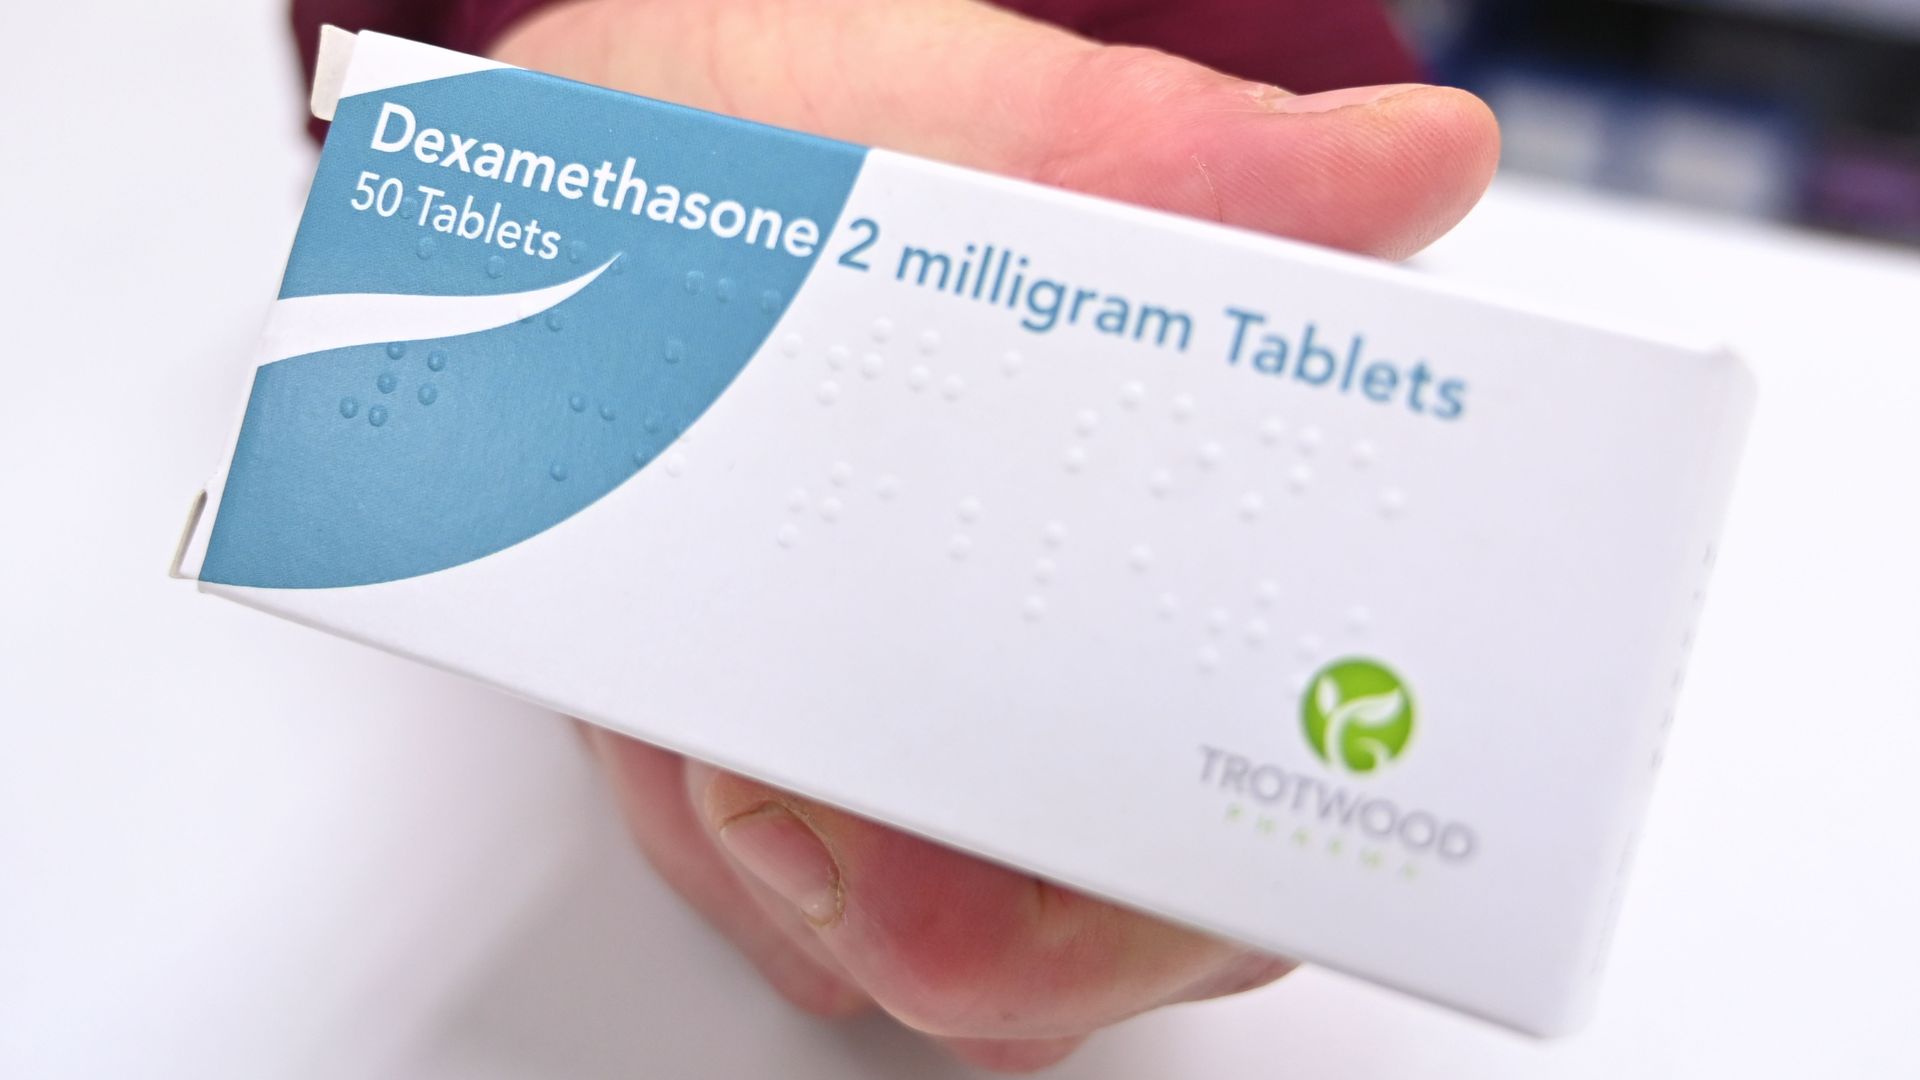 A hand holding a box of dexamethasone tablets.